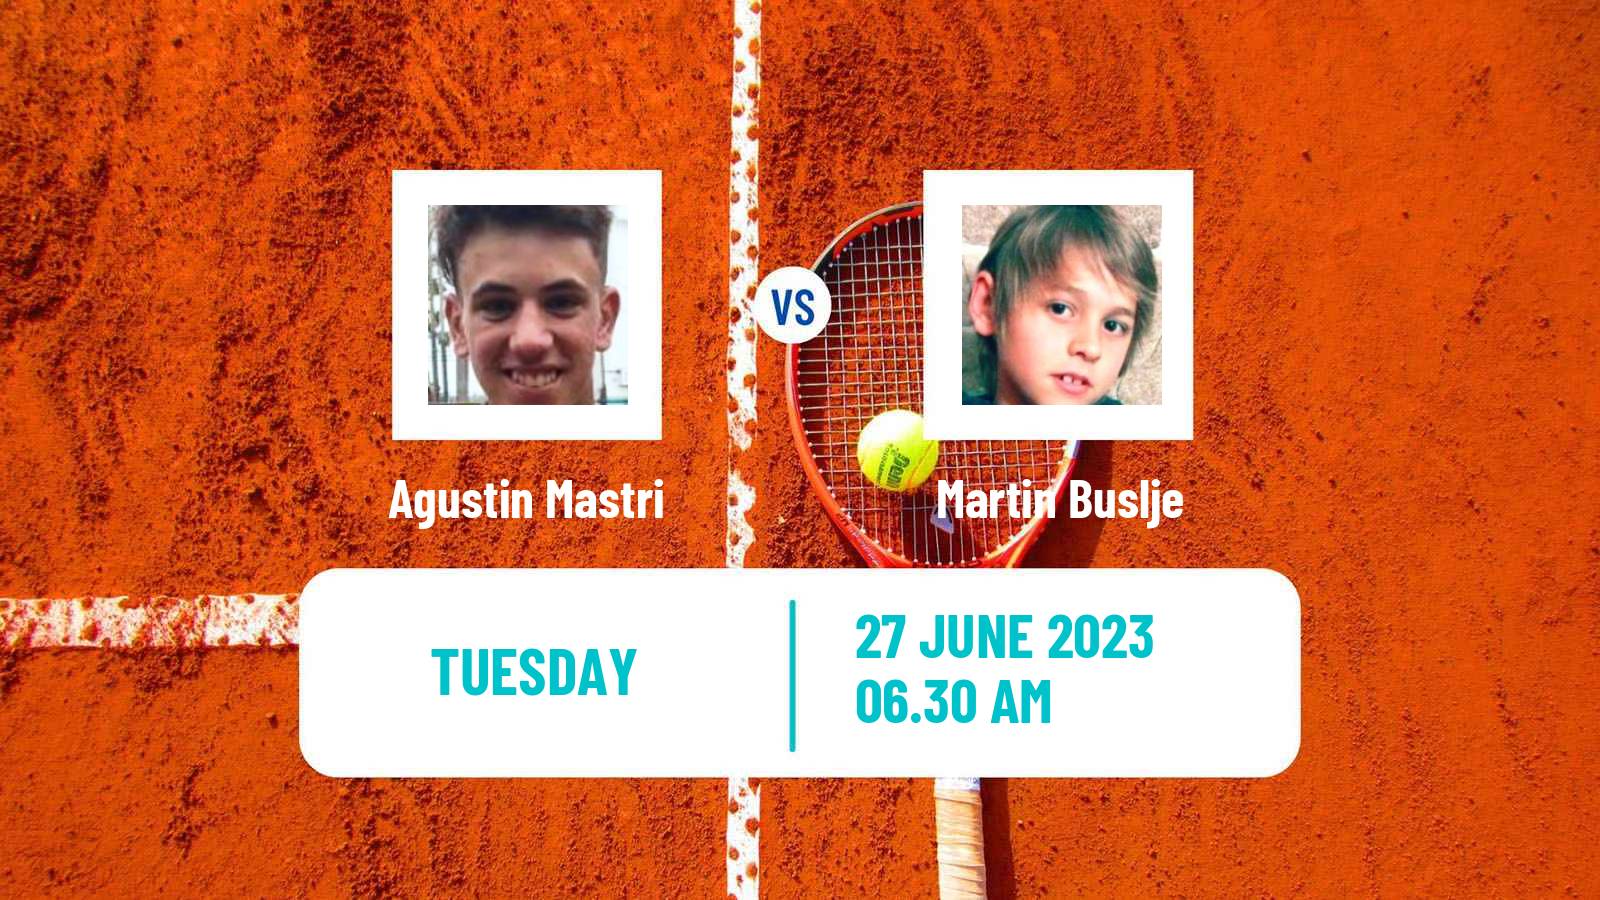 Tennis ITF M25 Rosario Santa Fe Men Agustin Mastri - Martin Buslje